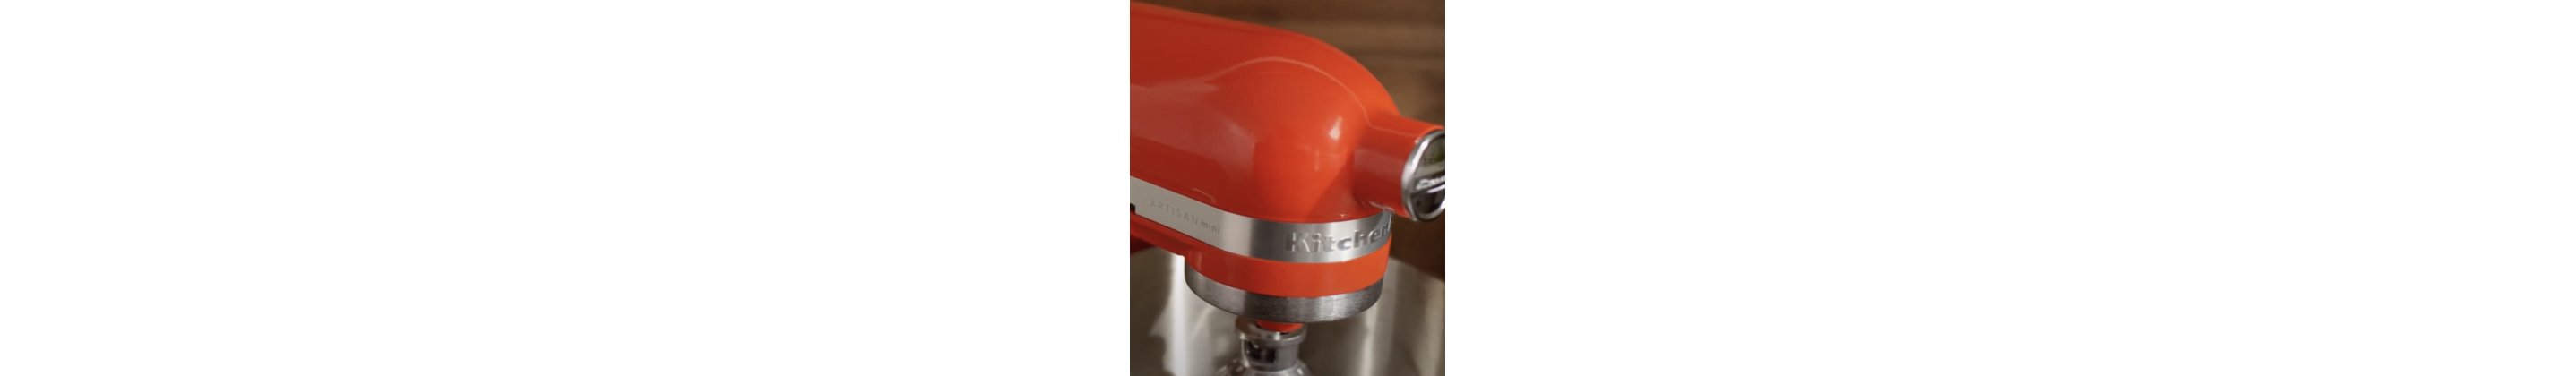 KSM3316XBK by KitchenAid - Artisan® Mini 3.5 Quart Tilt-Head Stand Mixer